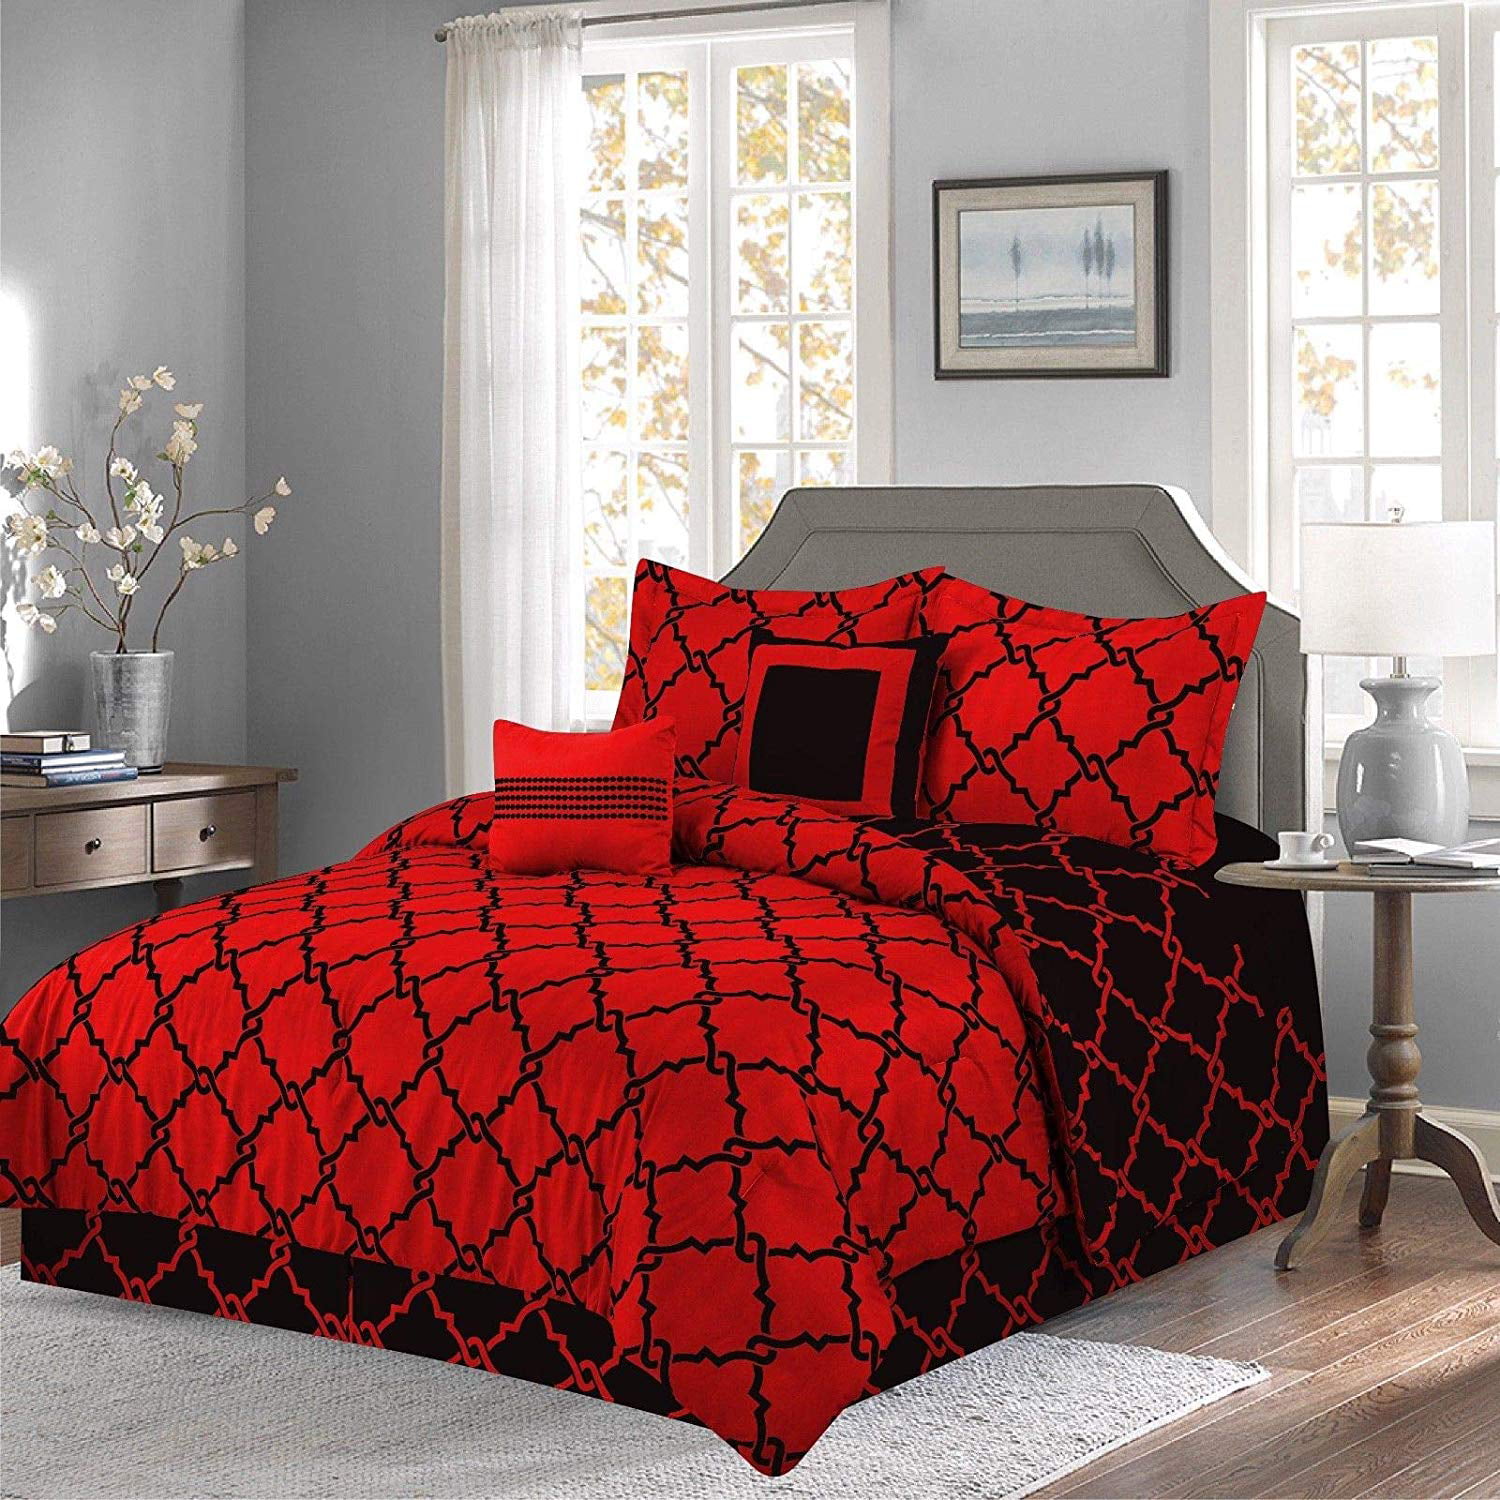 Soft Comforter Set Bed Sheets, California King Size Bed In A Bag Sets